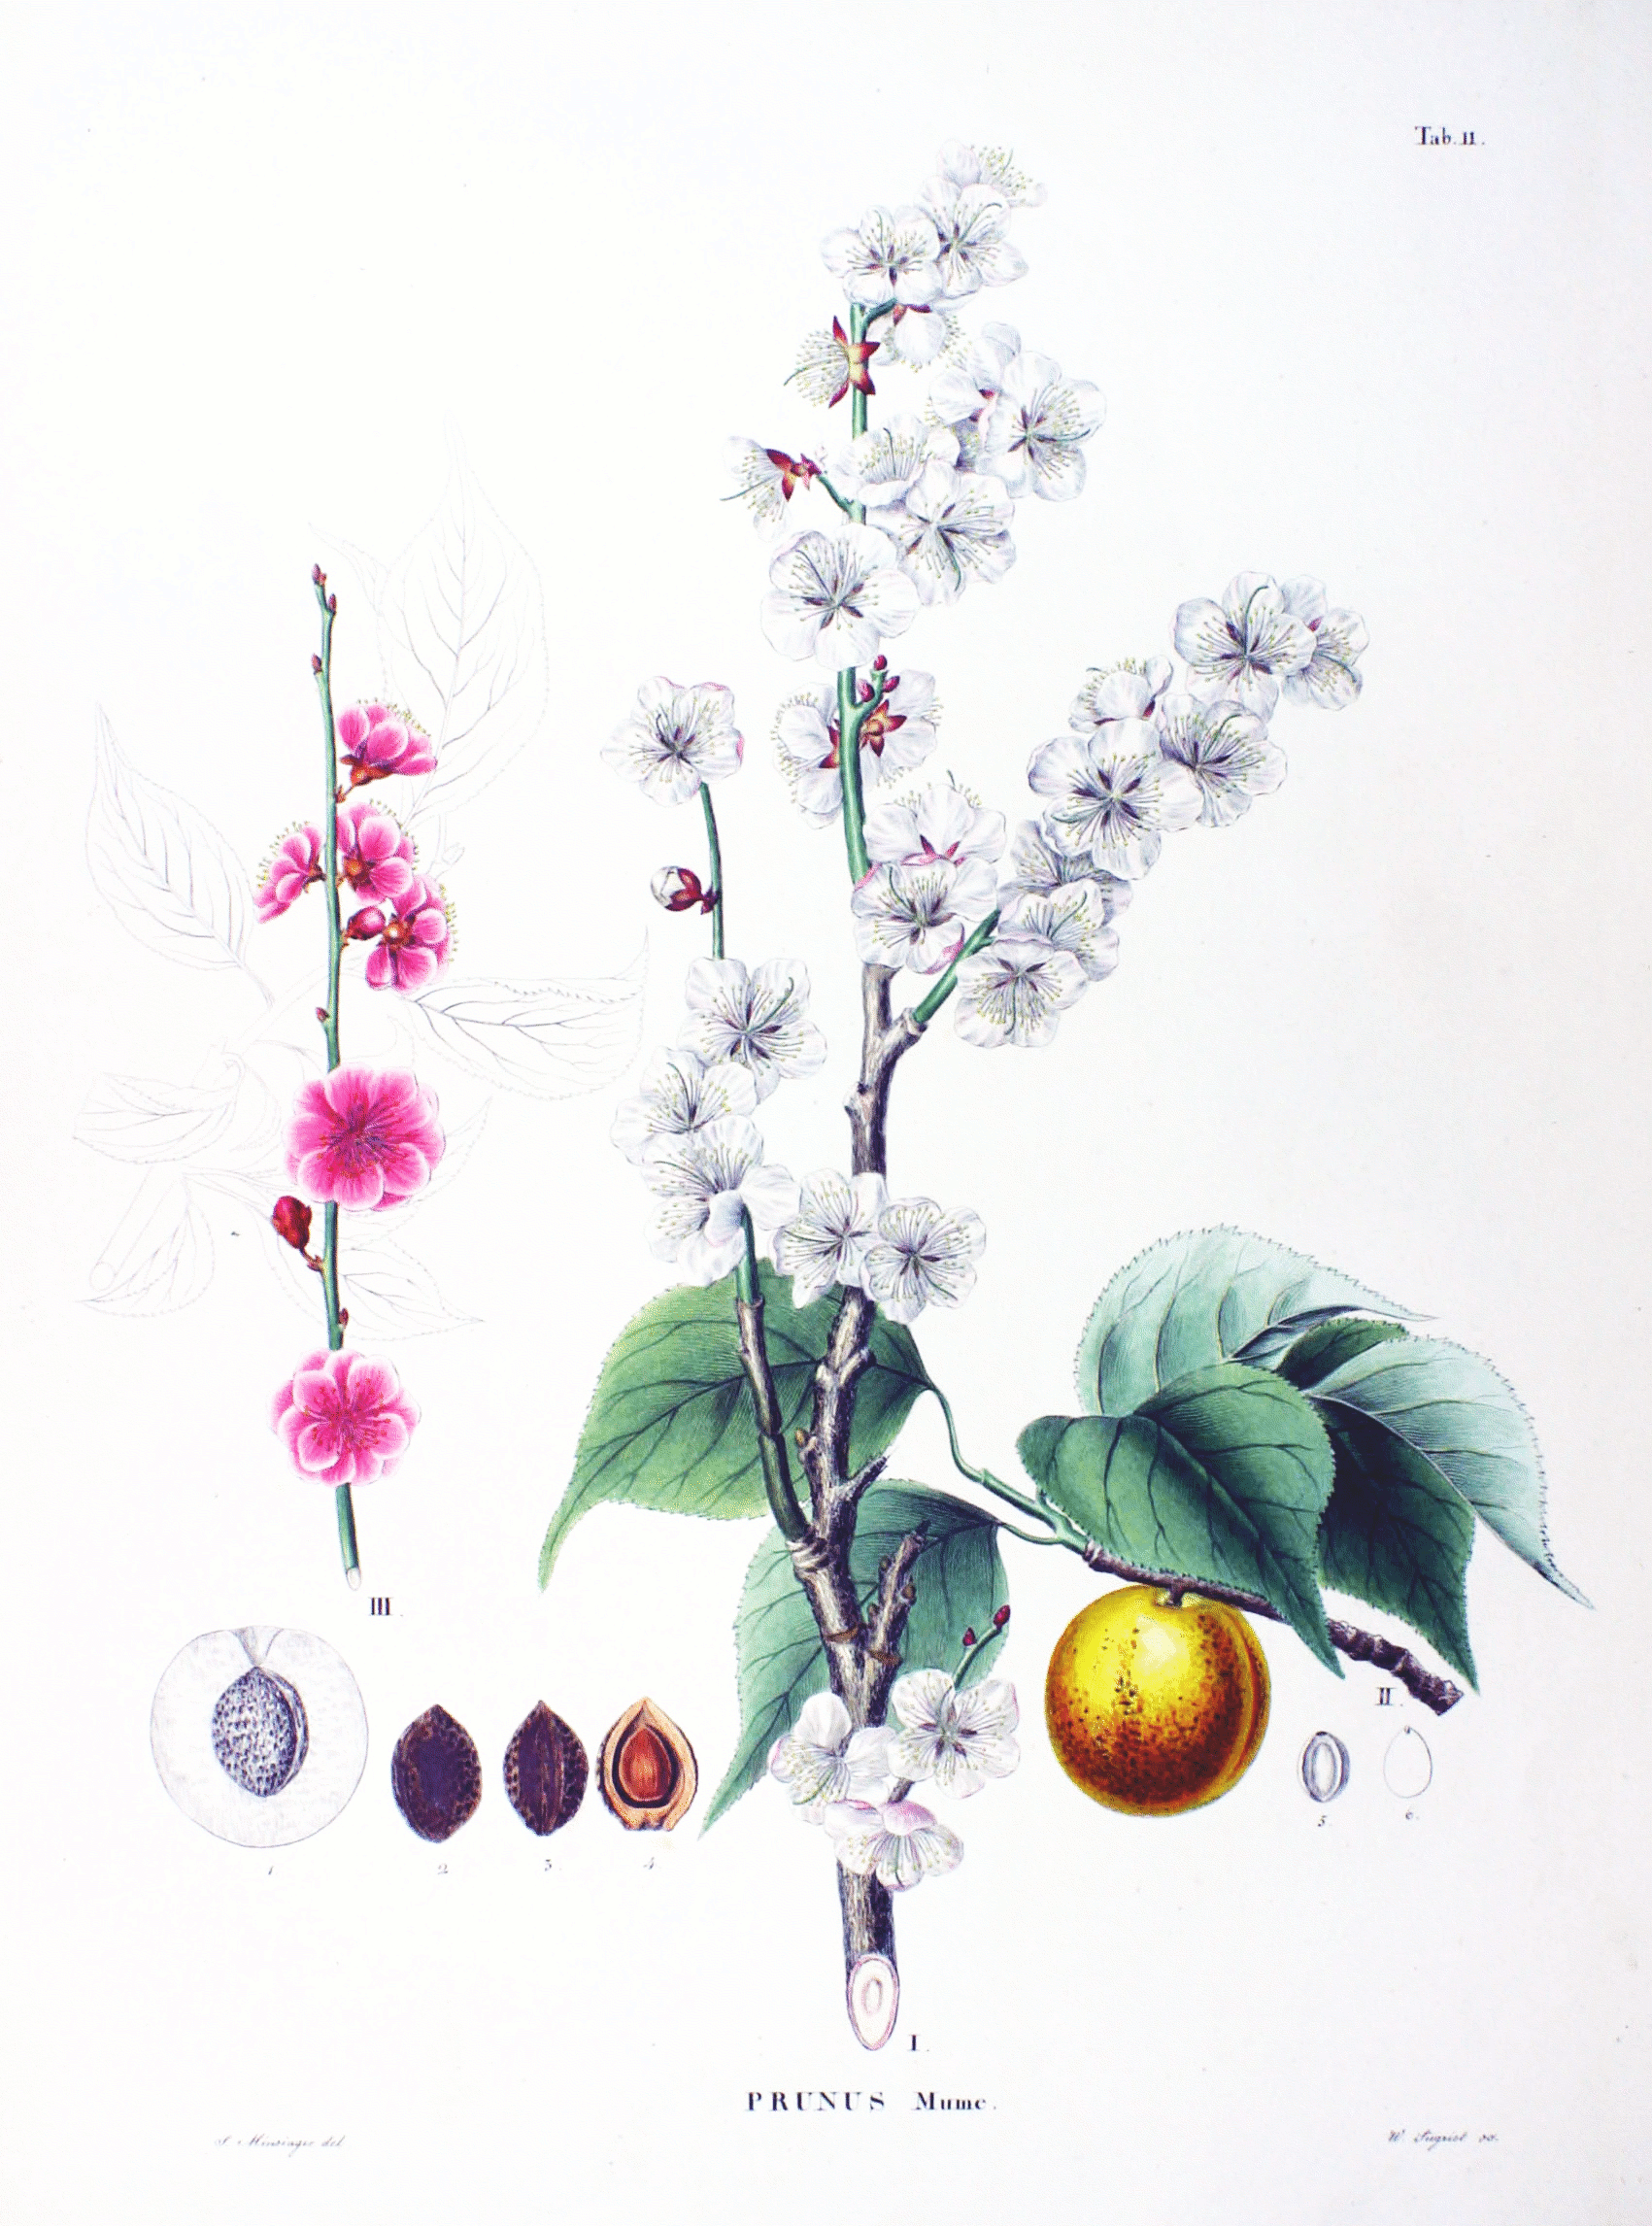 Illustration Prunus mume, Par Philipp Franz von Siebold and Joseph Gerhard Zuccarini - Flora Japonica, Sectio Prima, Tafelband -(domaine public), via wikimedia 